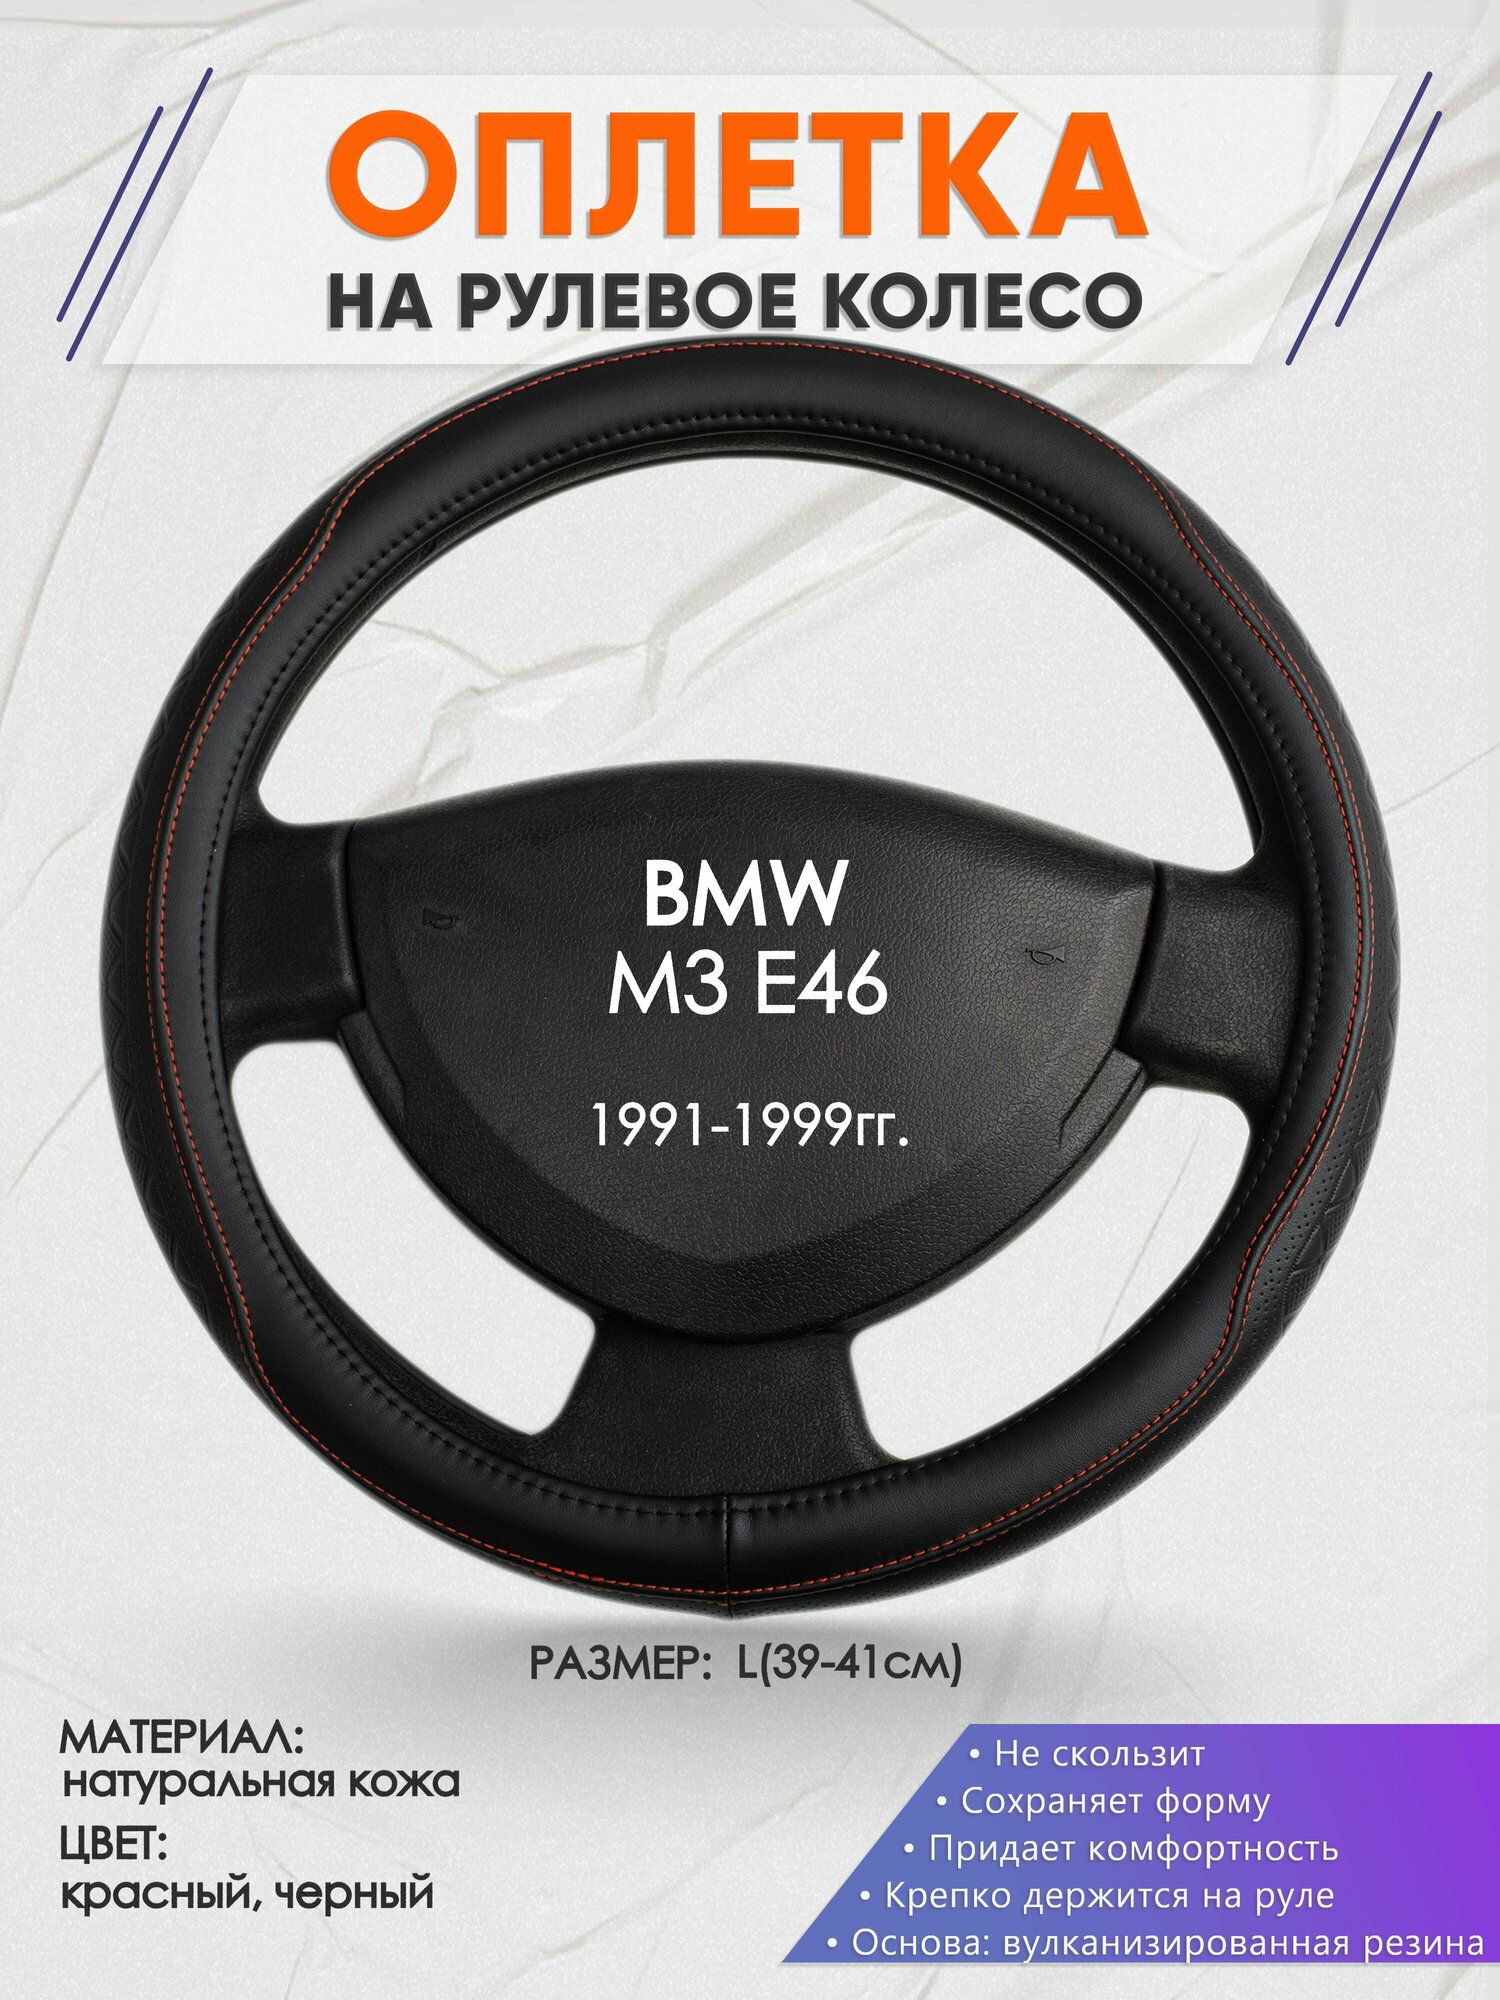 Оплетка на руль для BMW M3 E46(БМВ м3 е46) 1991-1999 L(39-41см) Натуральная кожа 22